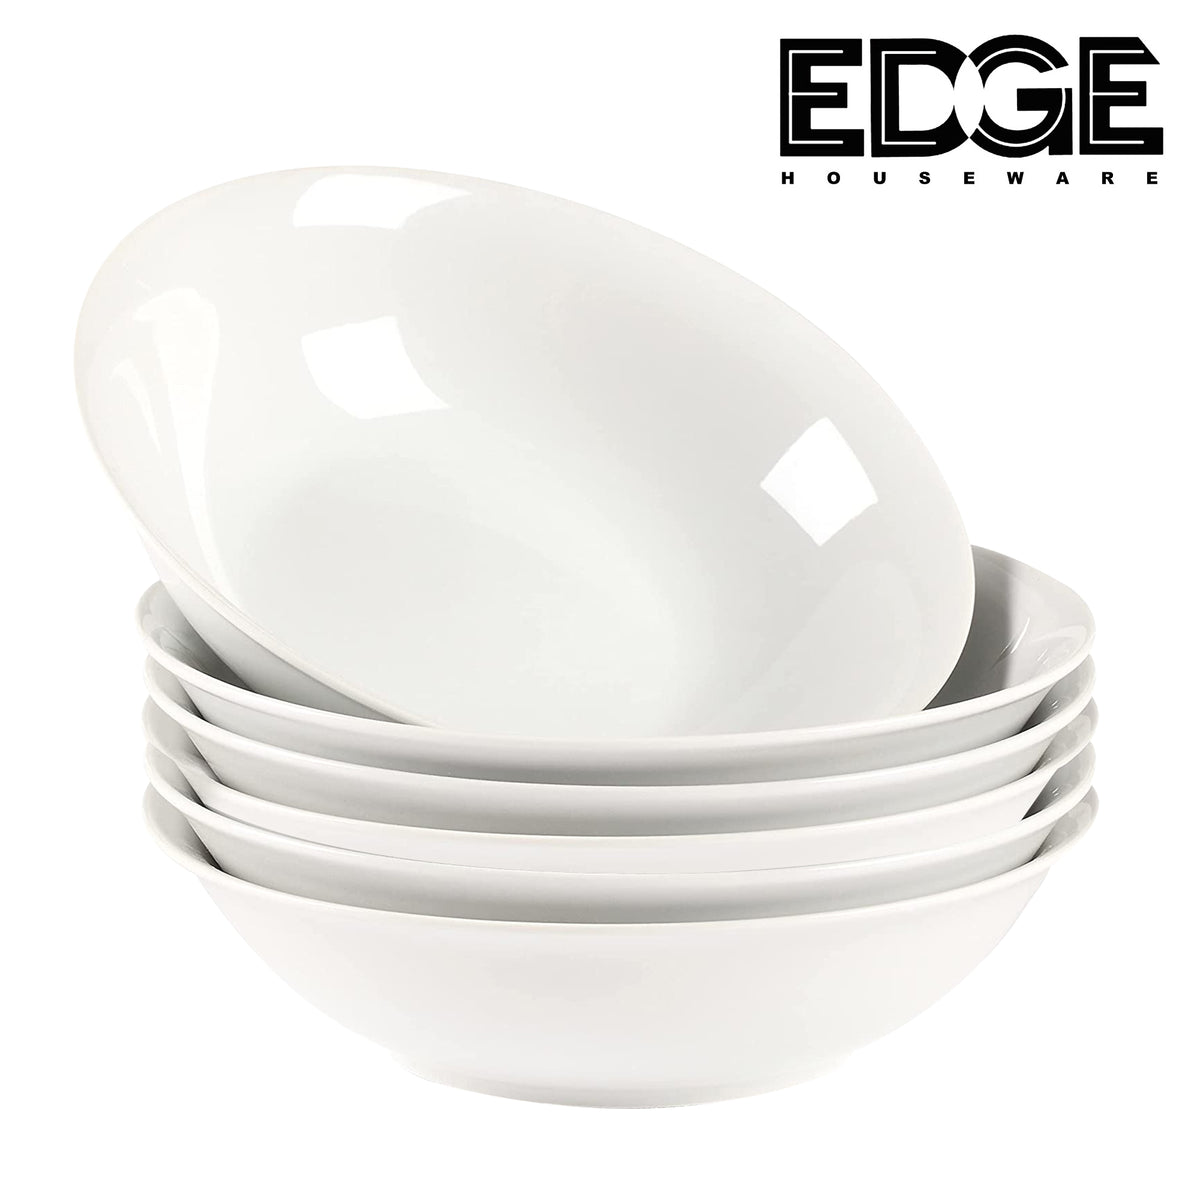 Edge Ceramic Soup Bowl set of 6 White Bowls